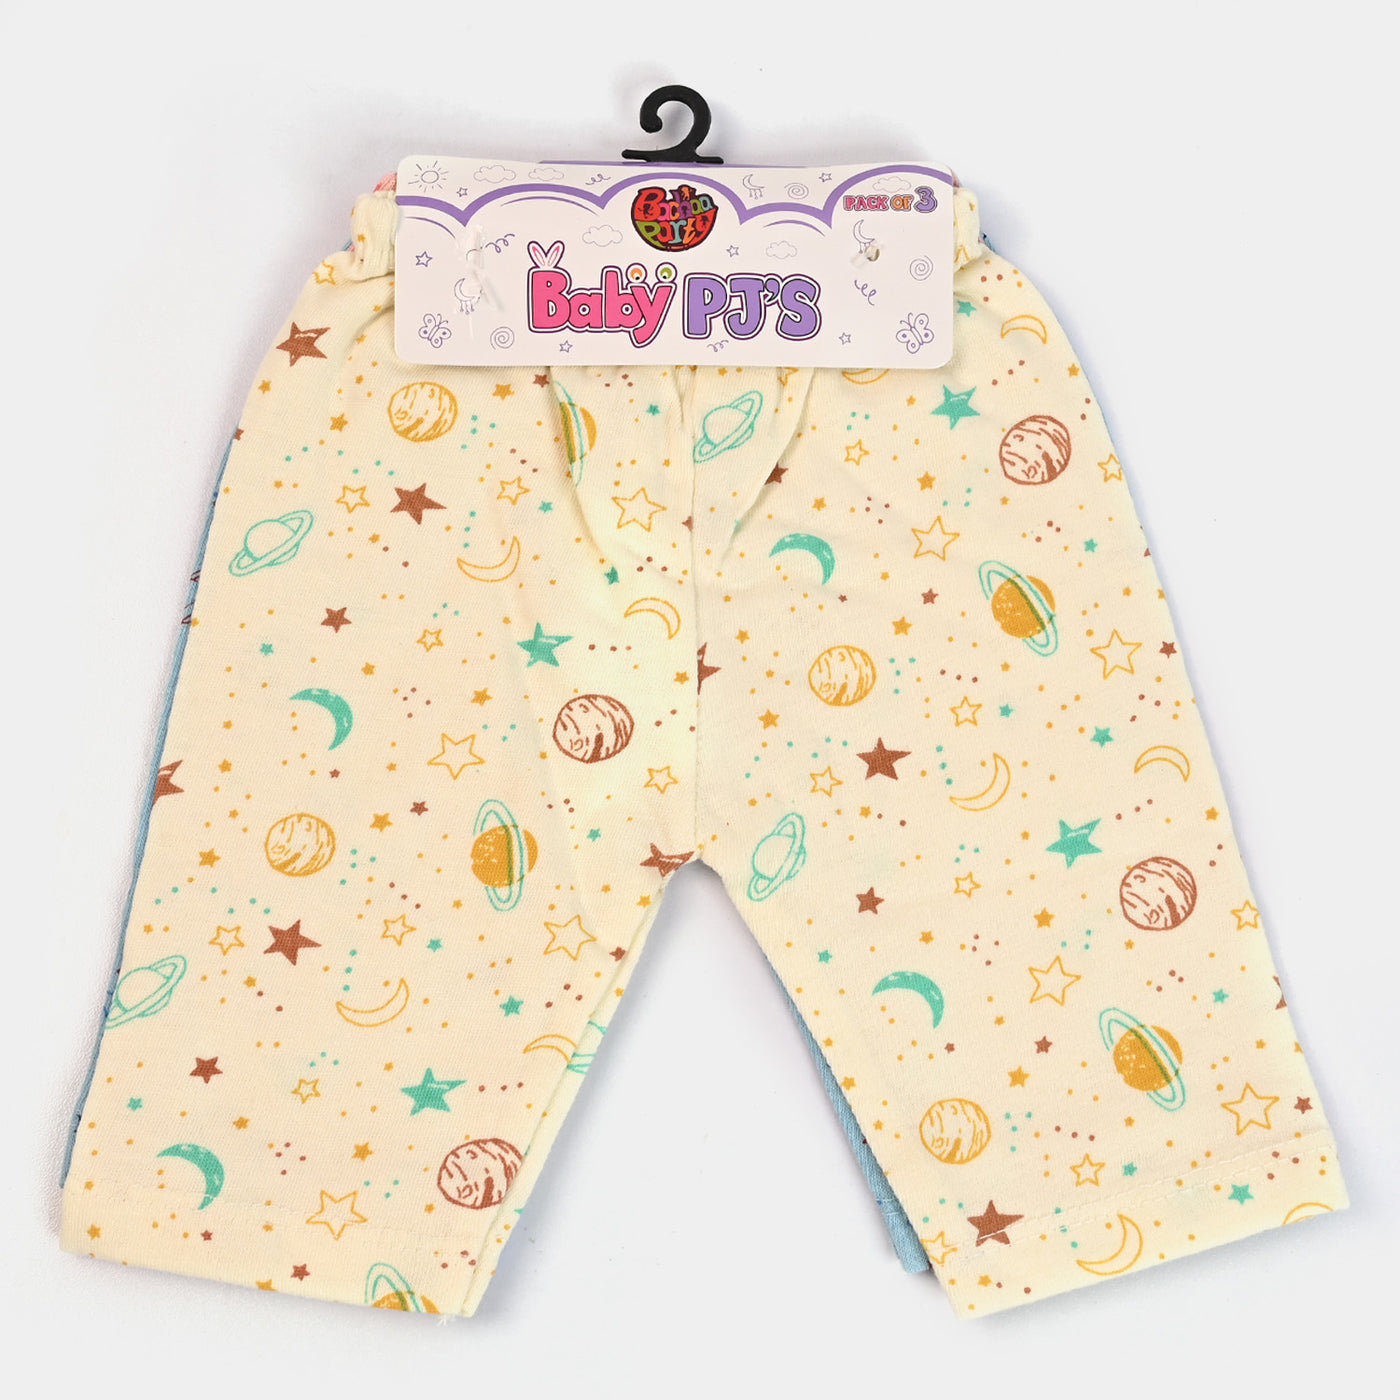 Infant Unisex Cotton Pajama Pack of 3PCs